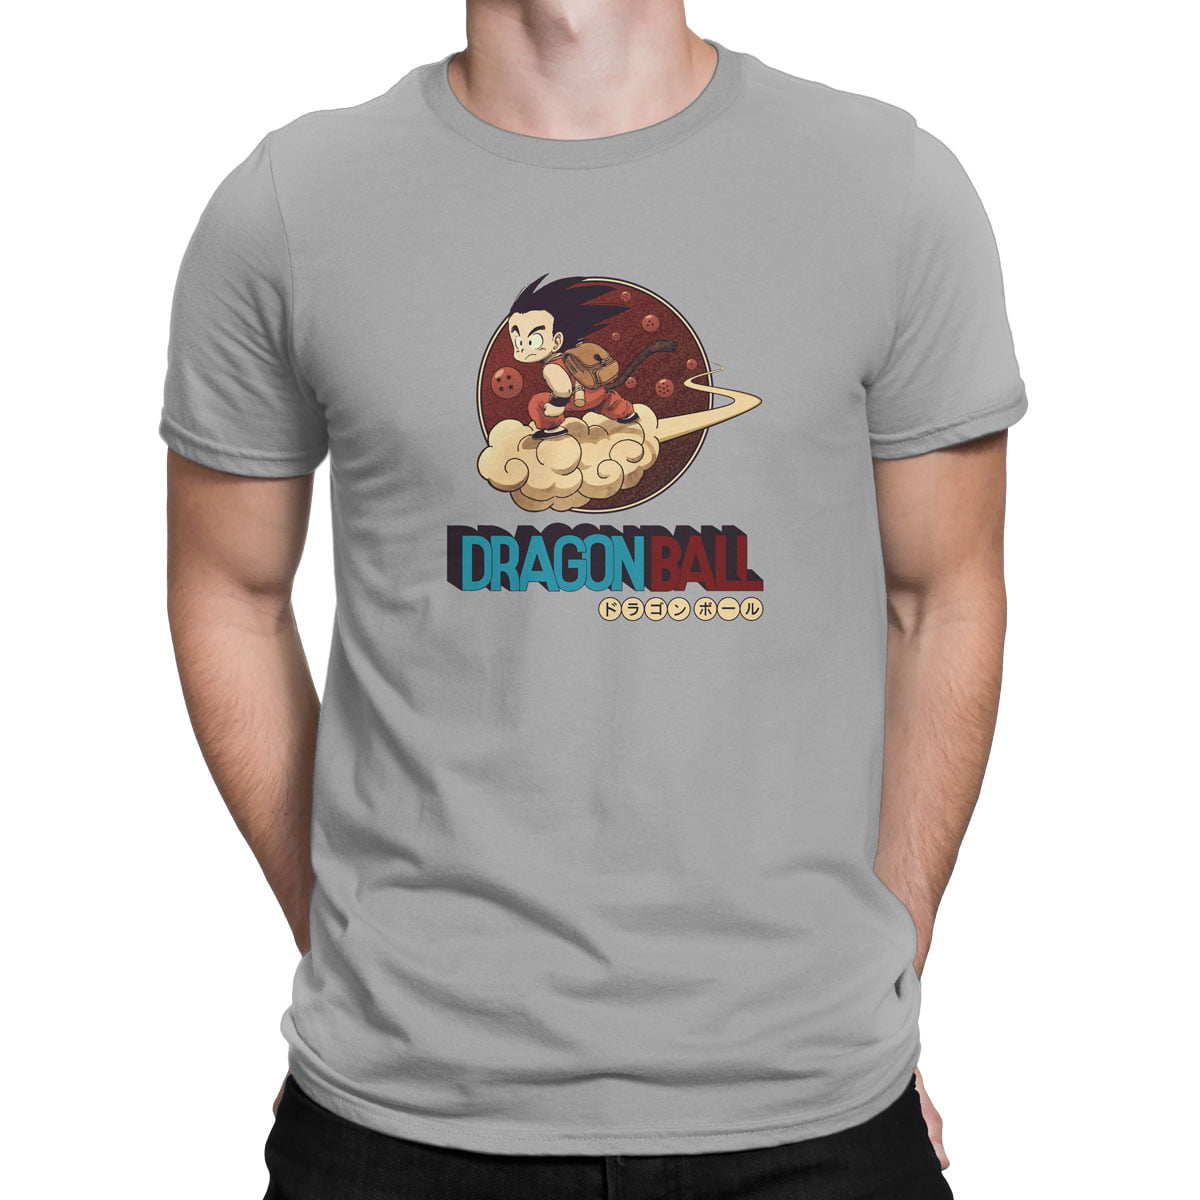 Dragonball 1 tshirt g erkek 1 - dragon ball goku no3 baskılı erkek t-shirt - figurex